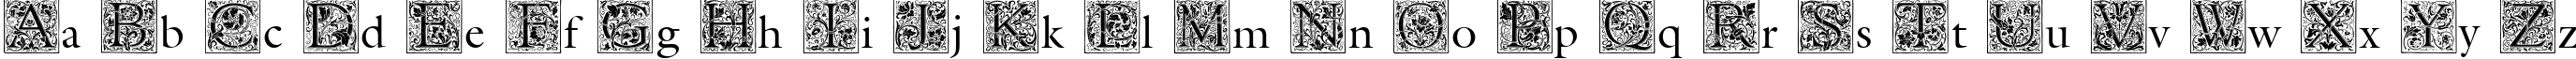 Пример написания английского алфавита шрифтом Medieval Initial Two